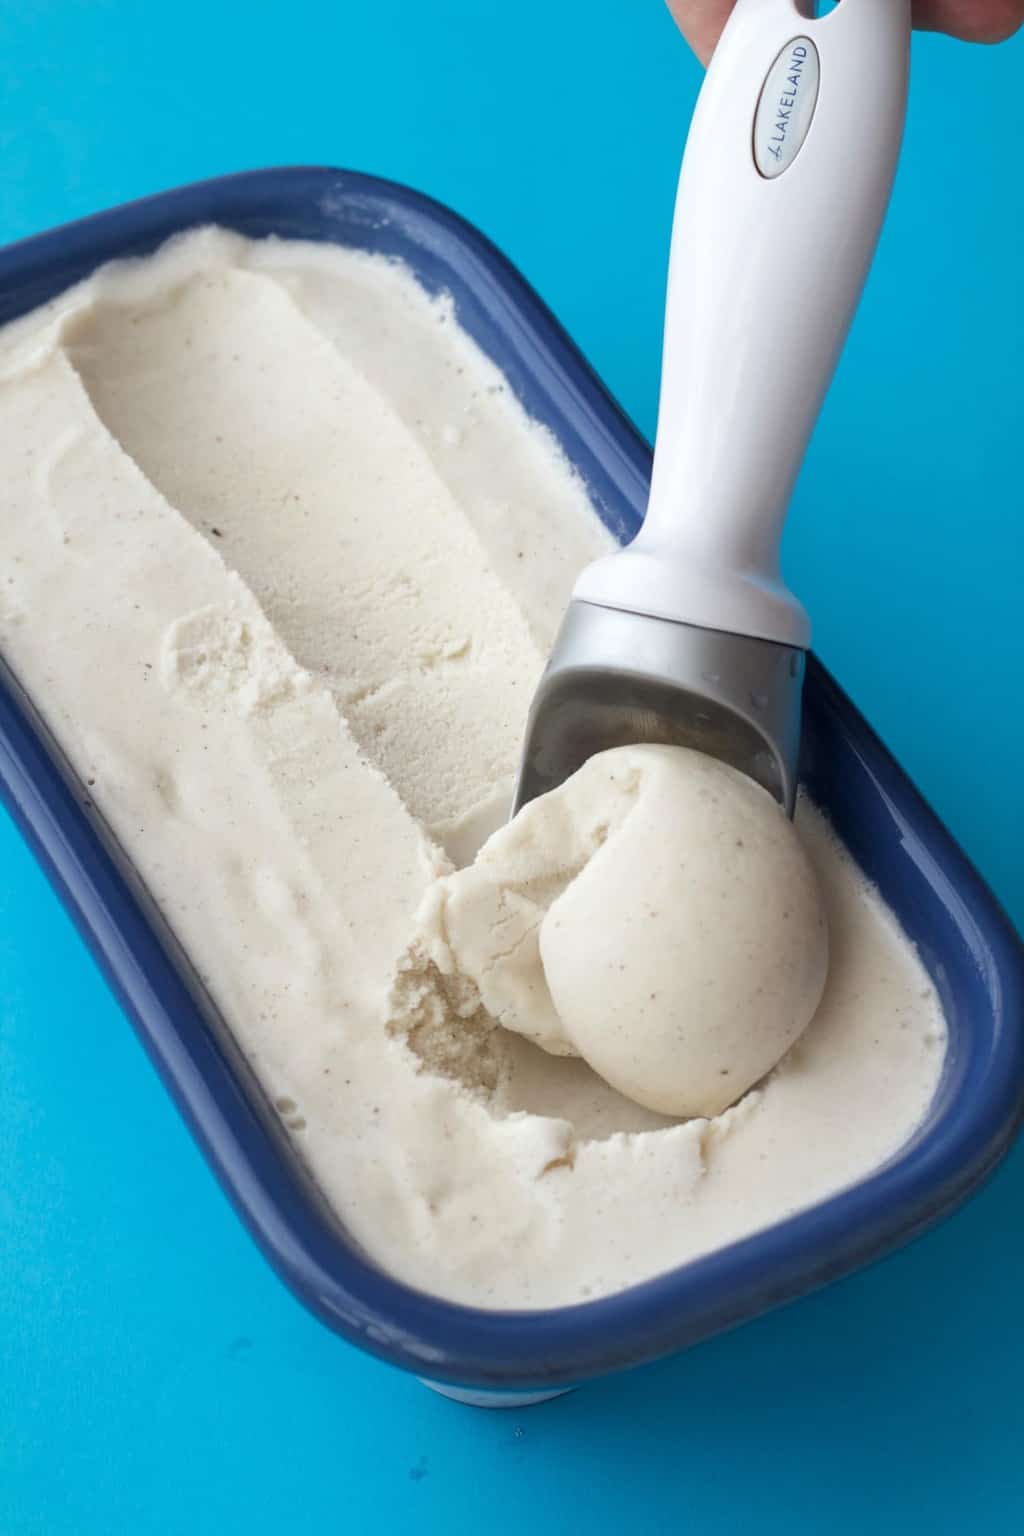 Vegan vanilla ice cream in a blue ceramic loaf pan with an ice cream scoop. 